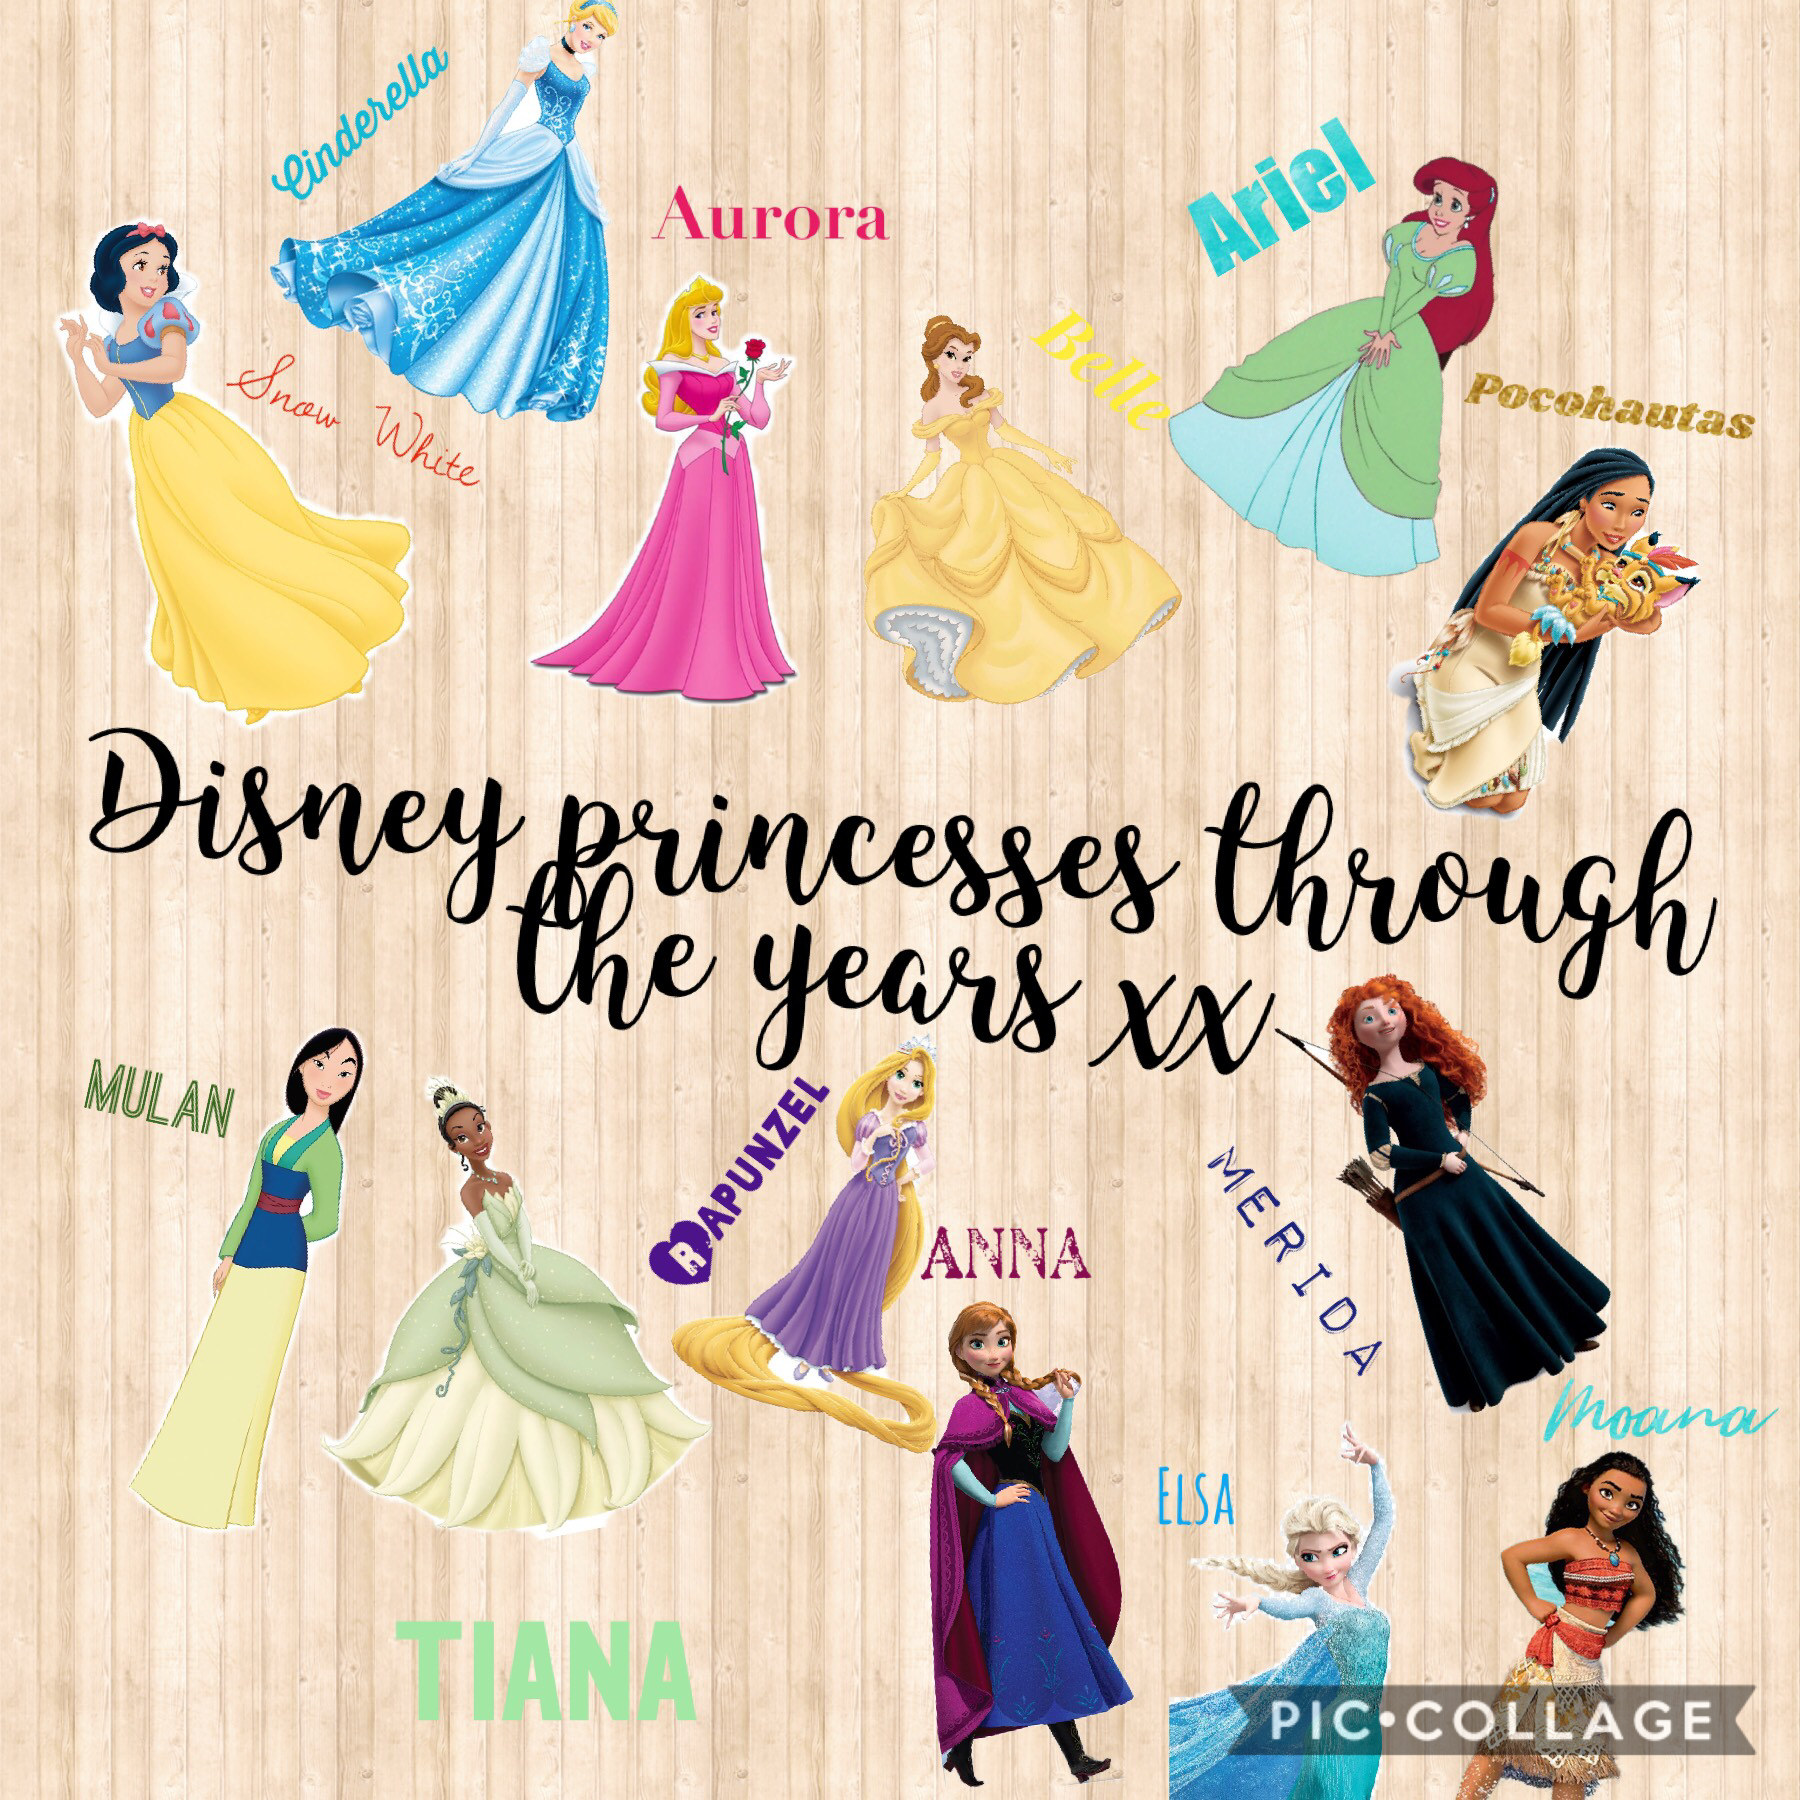 Disney princesses through the years